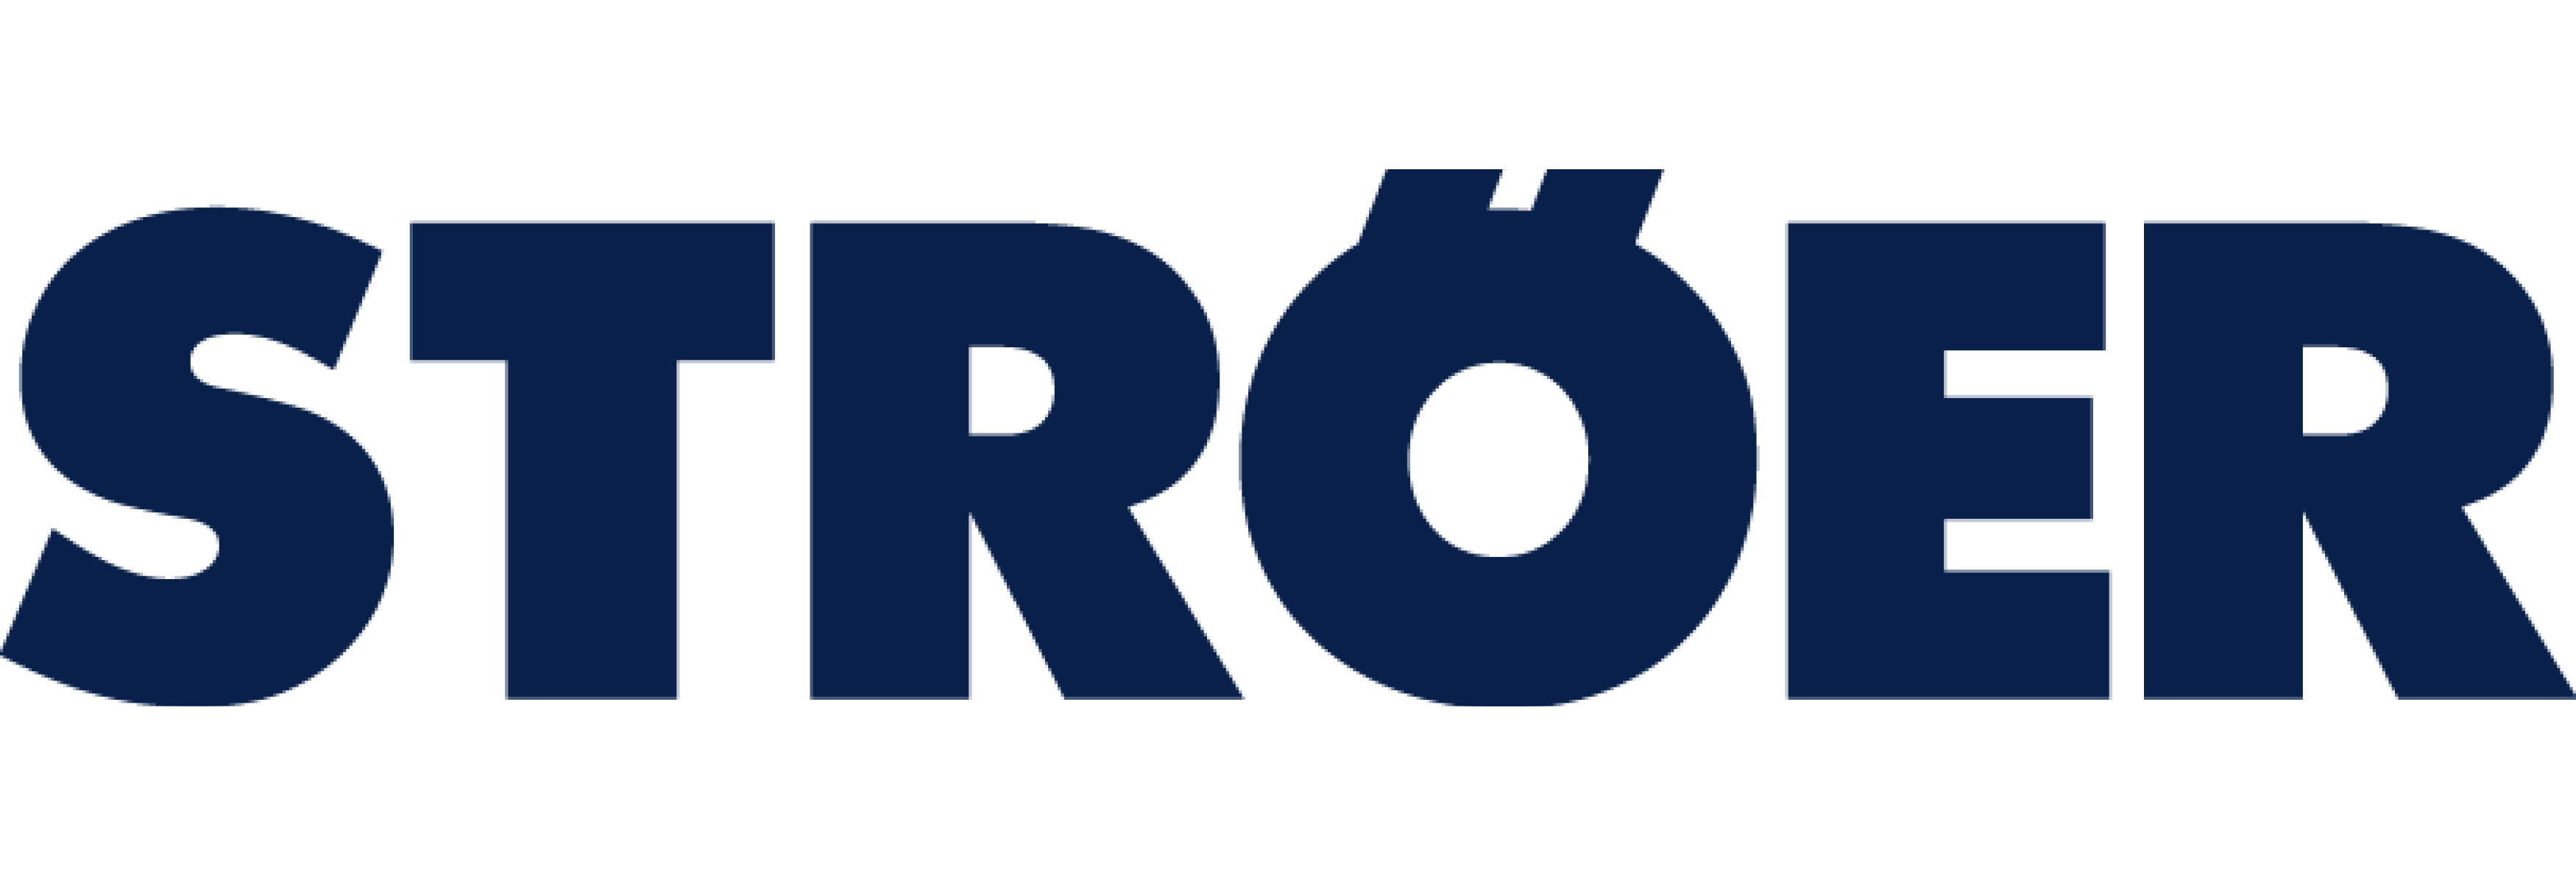 Ströer logo